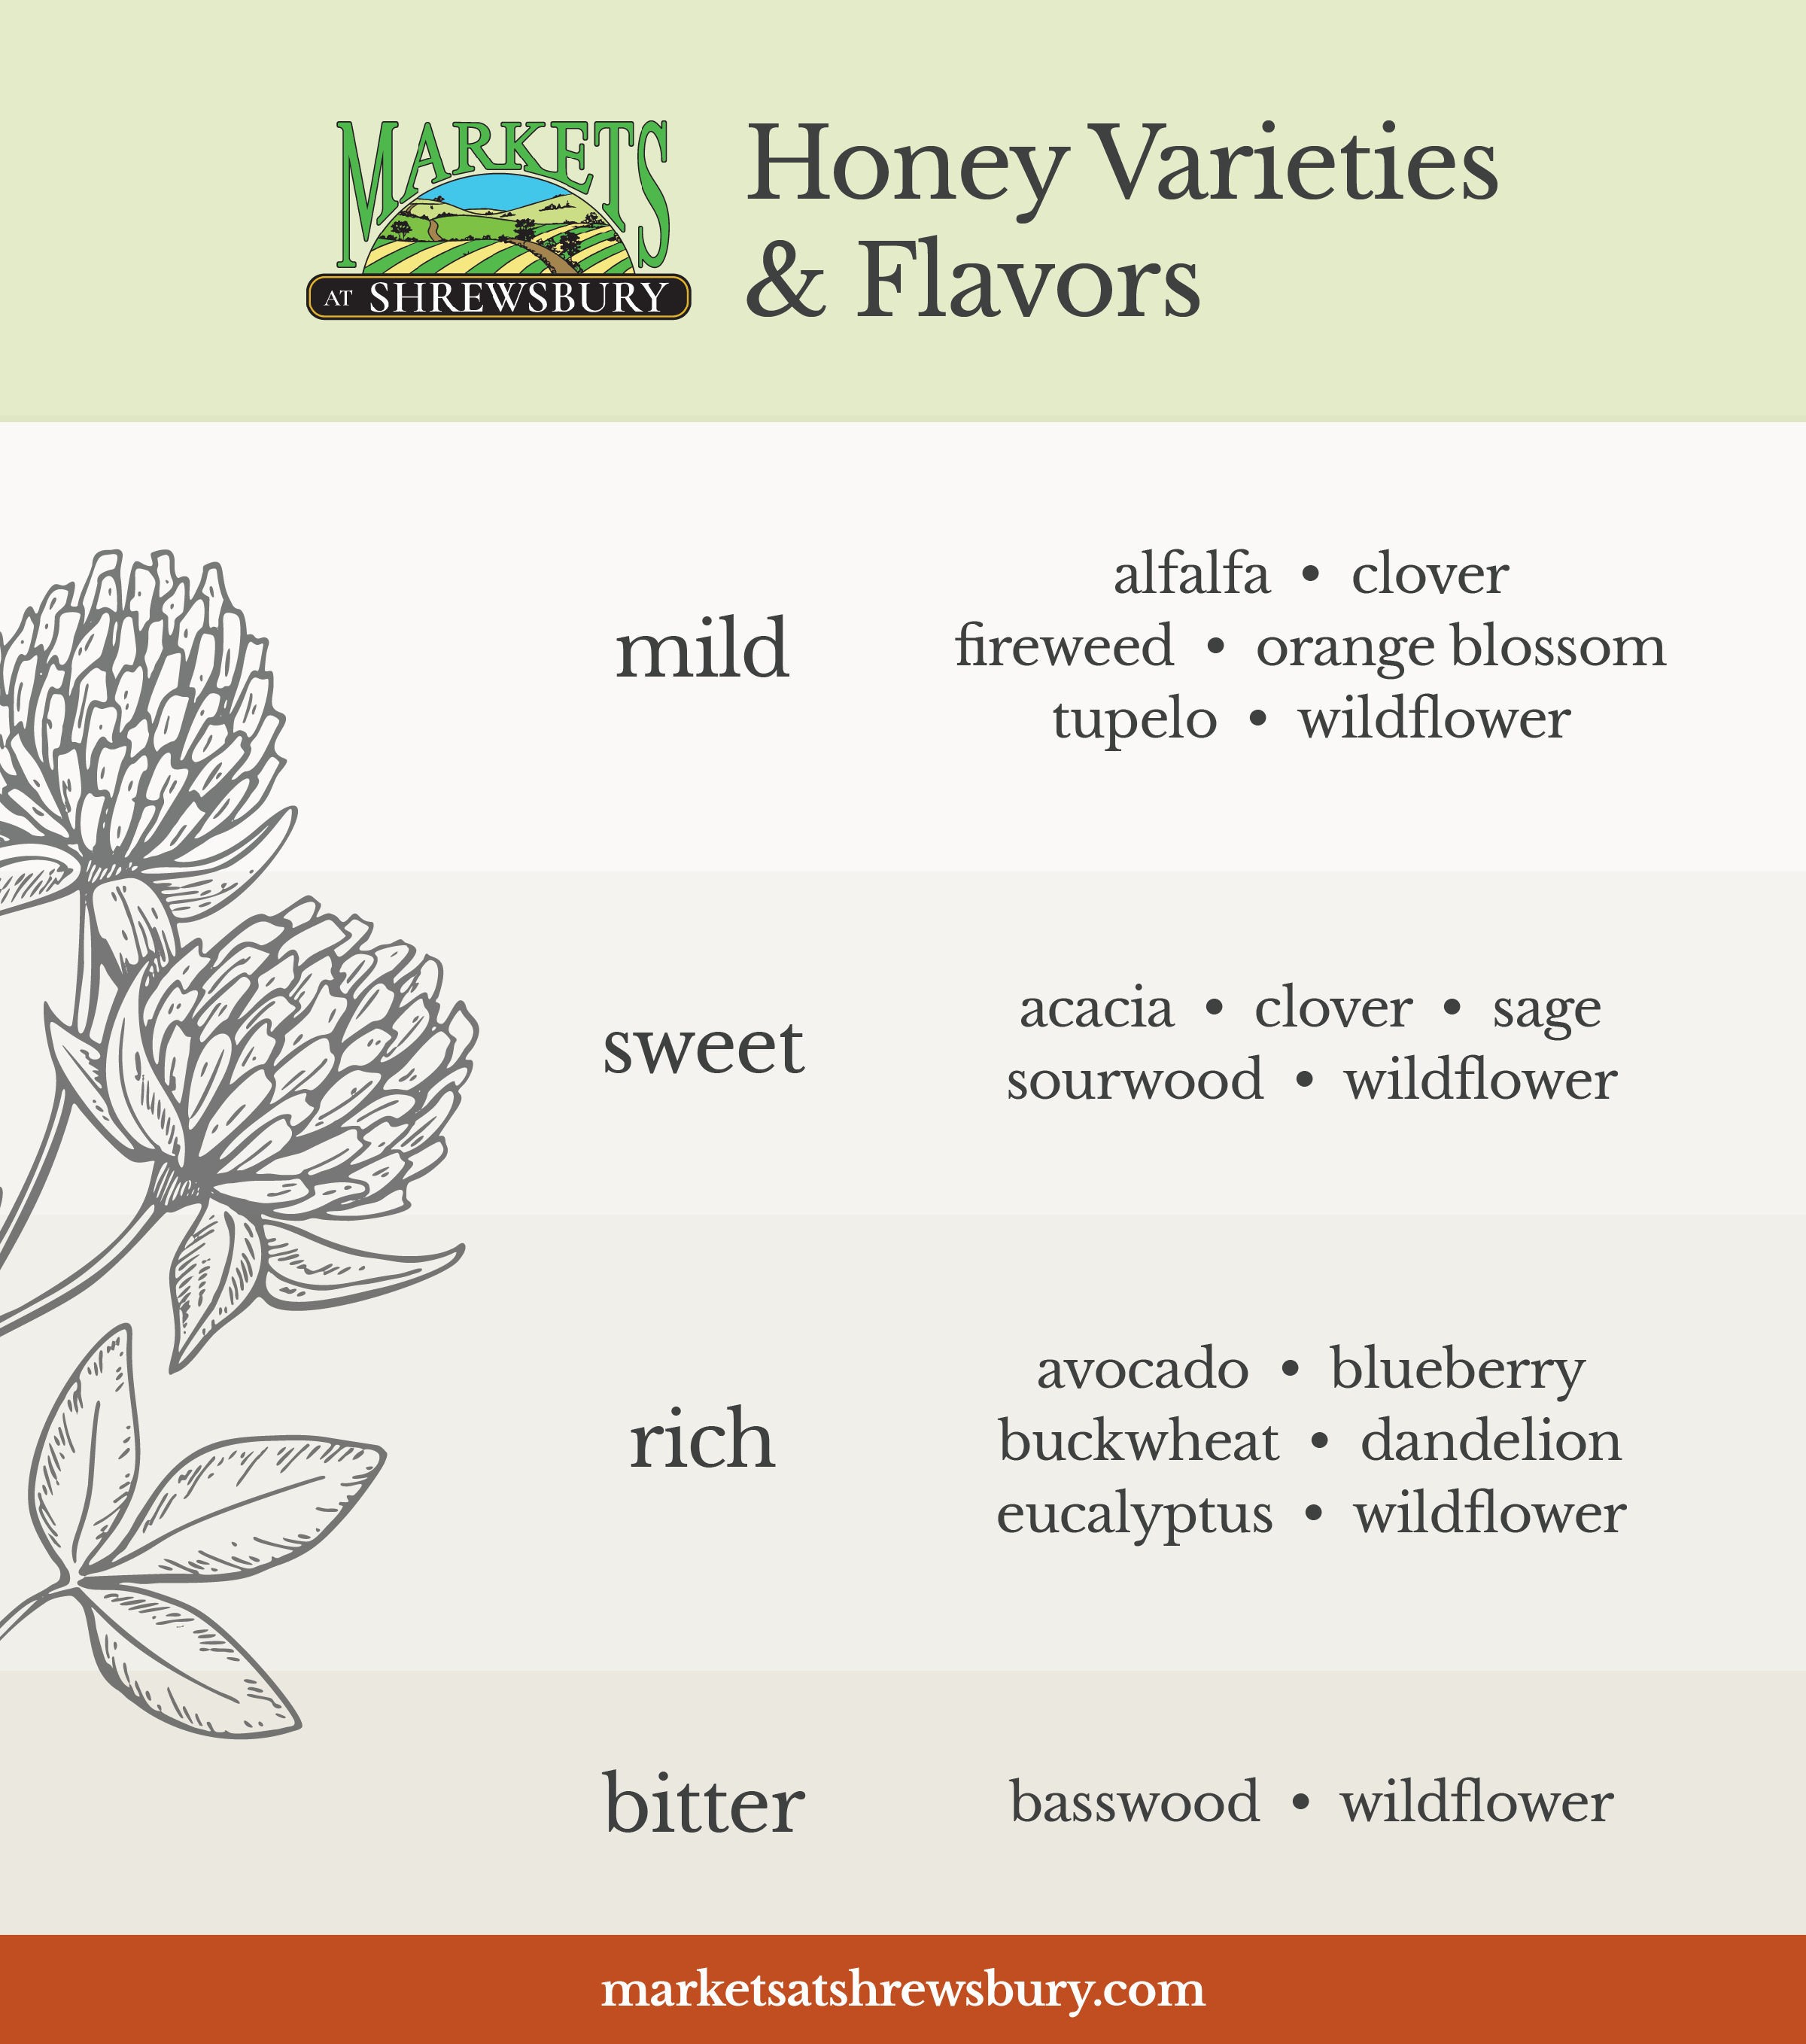 Honey varieties categorized by flavor